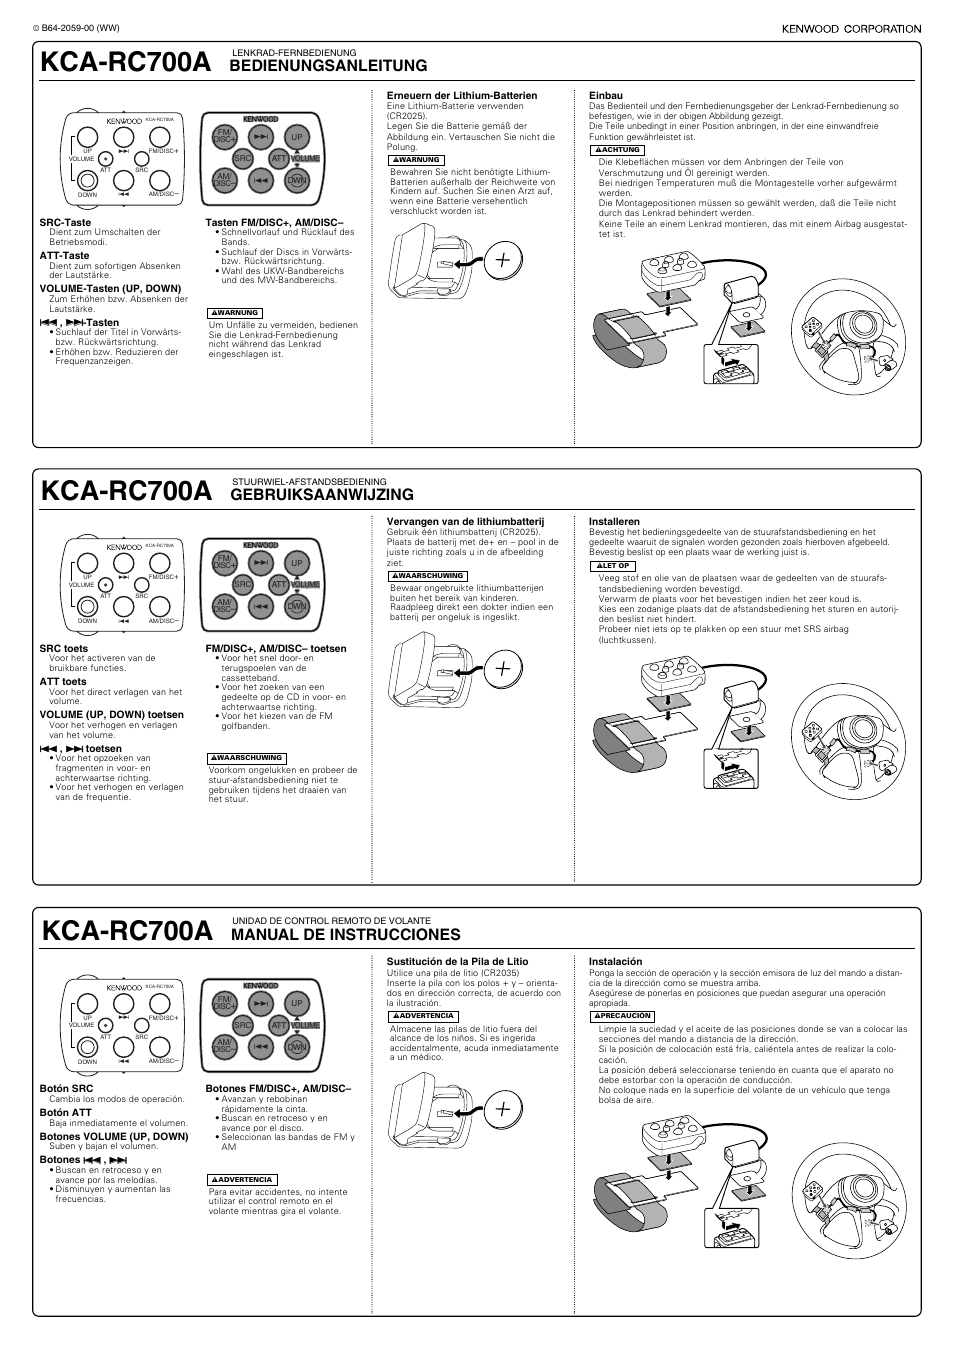 German, Dutch, Spanish | Kenwood KCA-RC700A User Manual | Page 2 / 2 |  Original mode